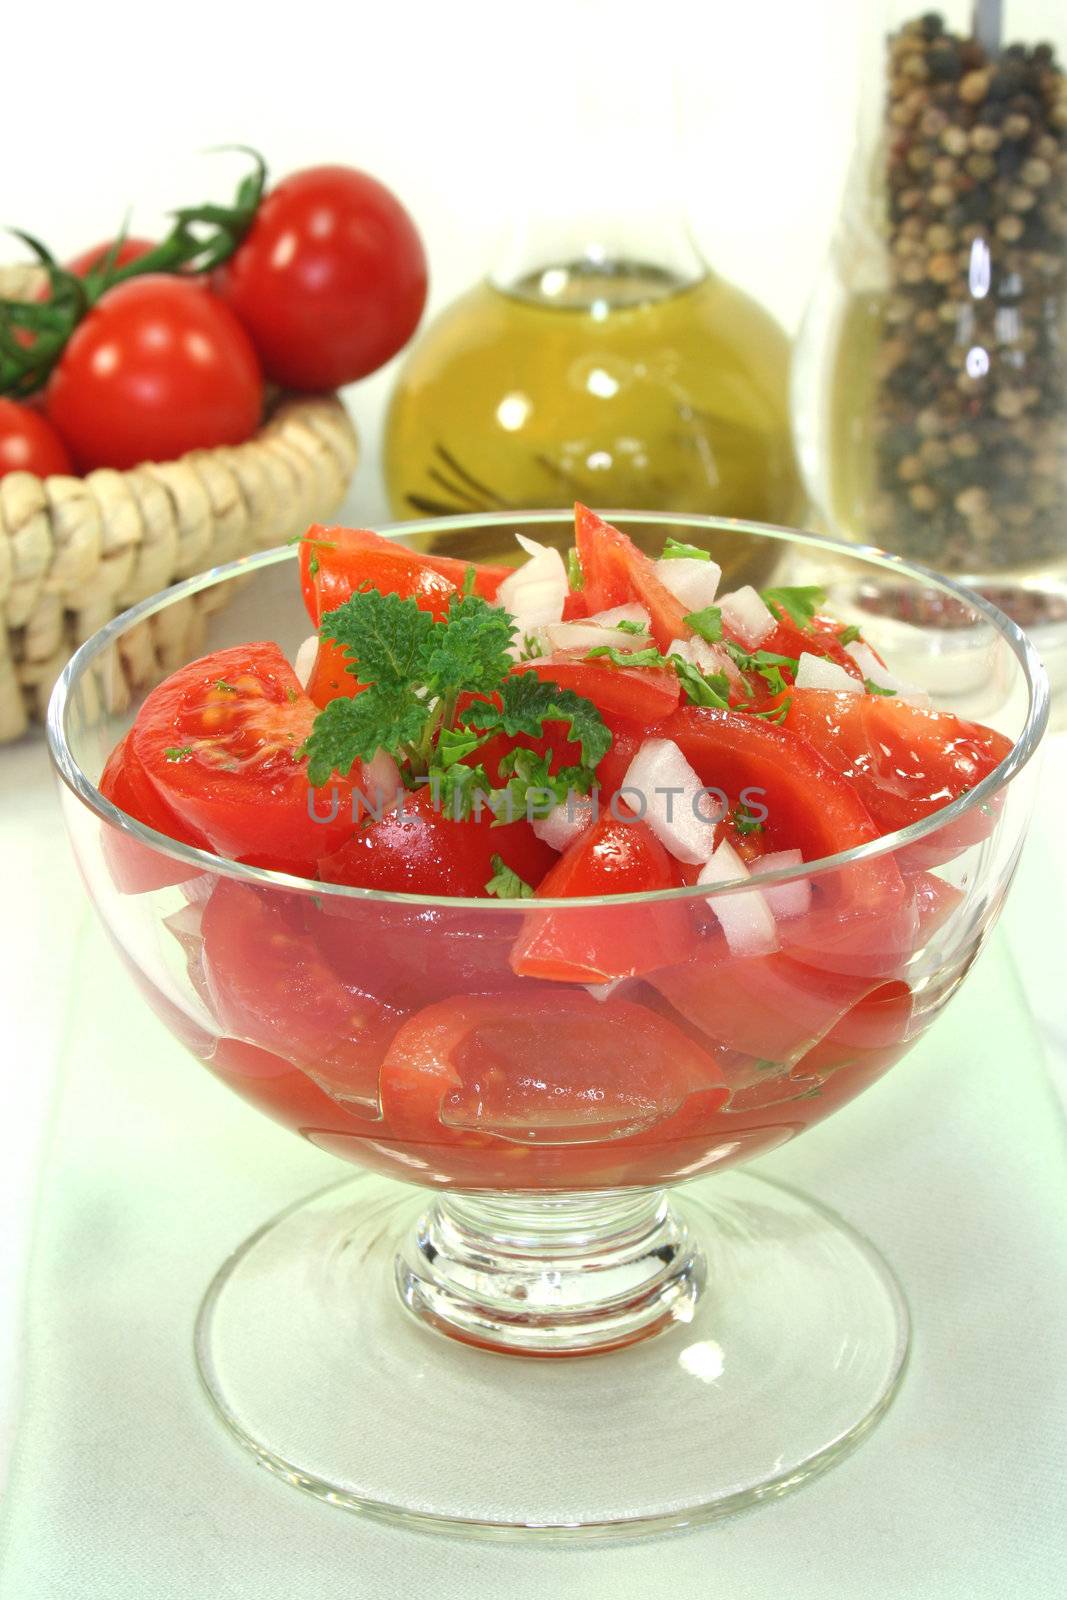 Tomato salad with fresh herbs